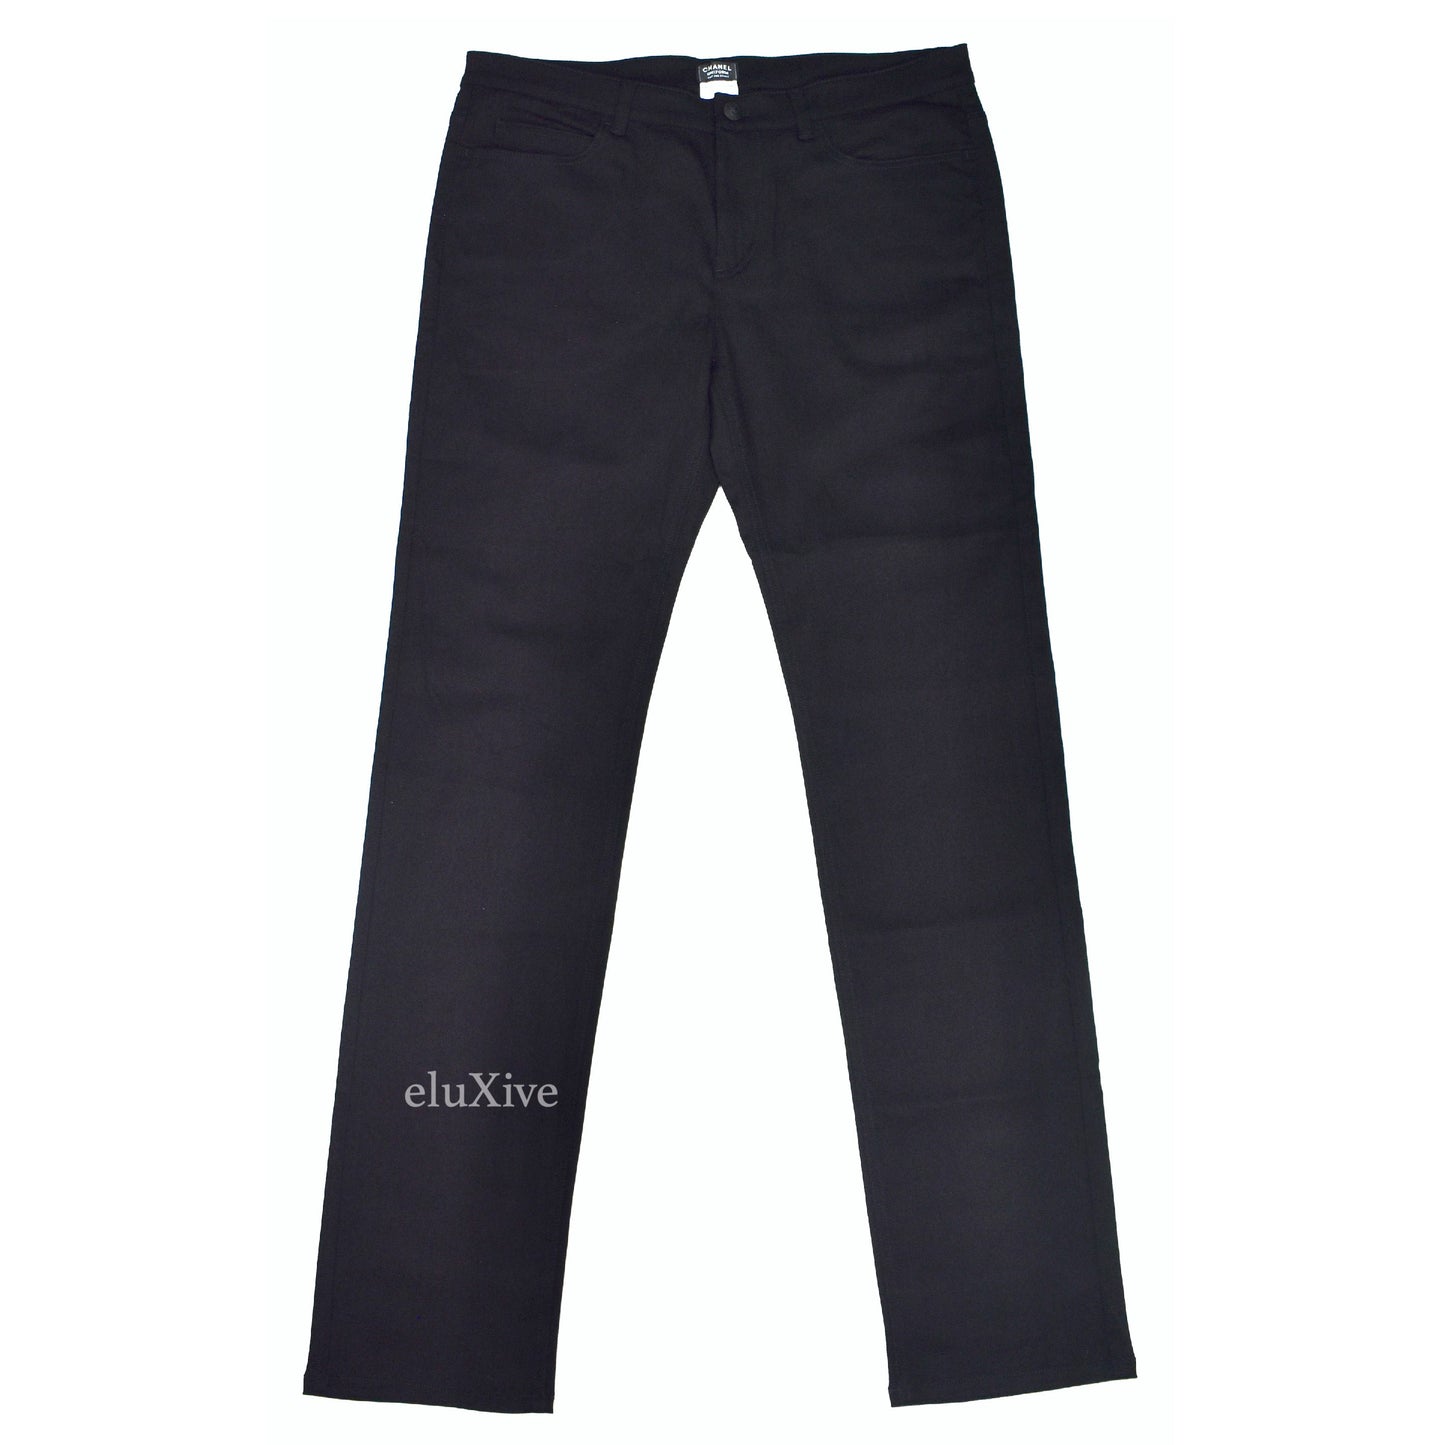 Chanel - Black Stretch Denim Uniform Jeans